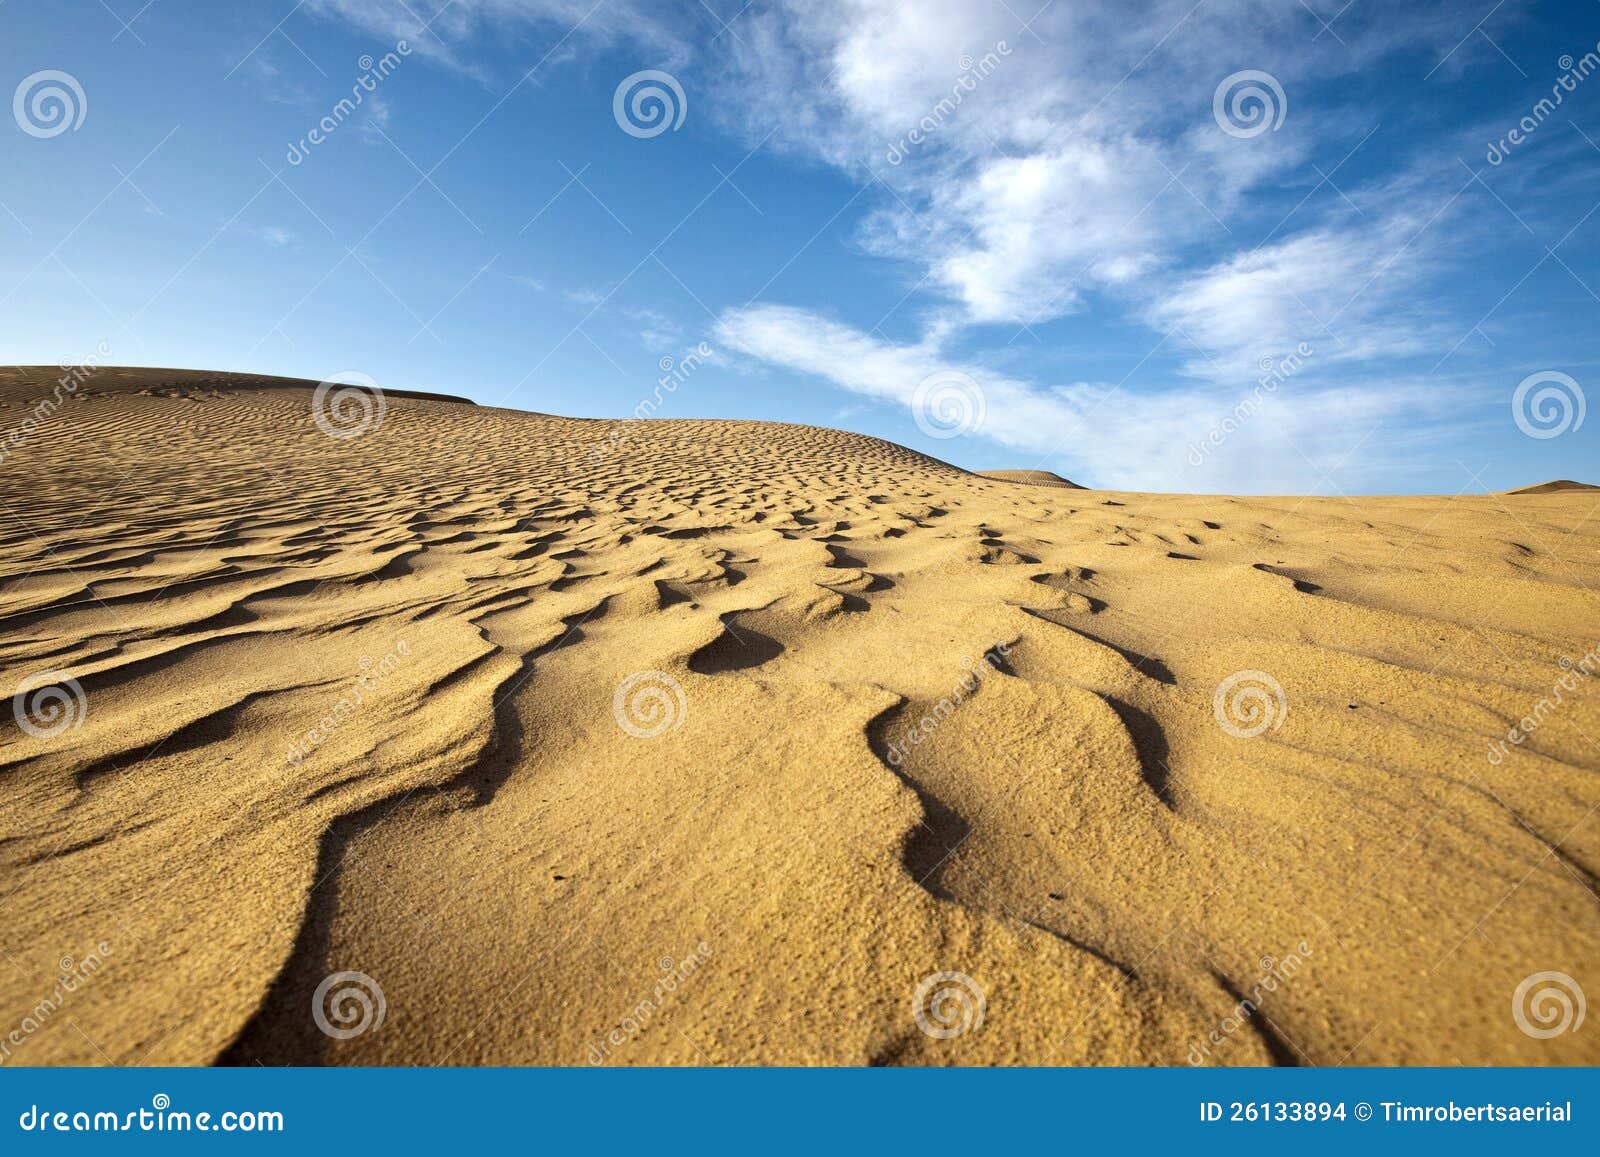 Shifting Sands stock photo. Image of desert, california - 26133894